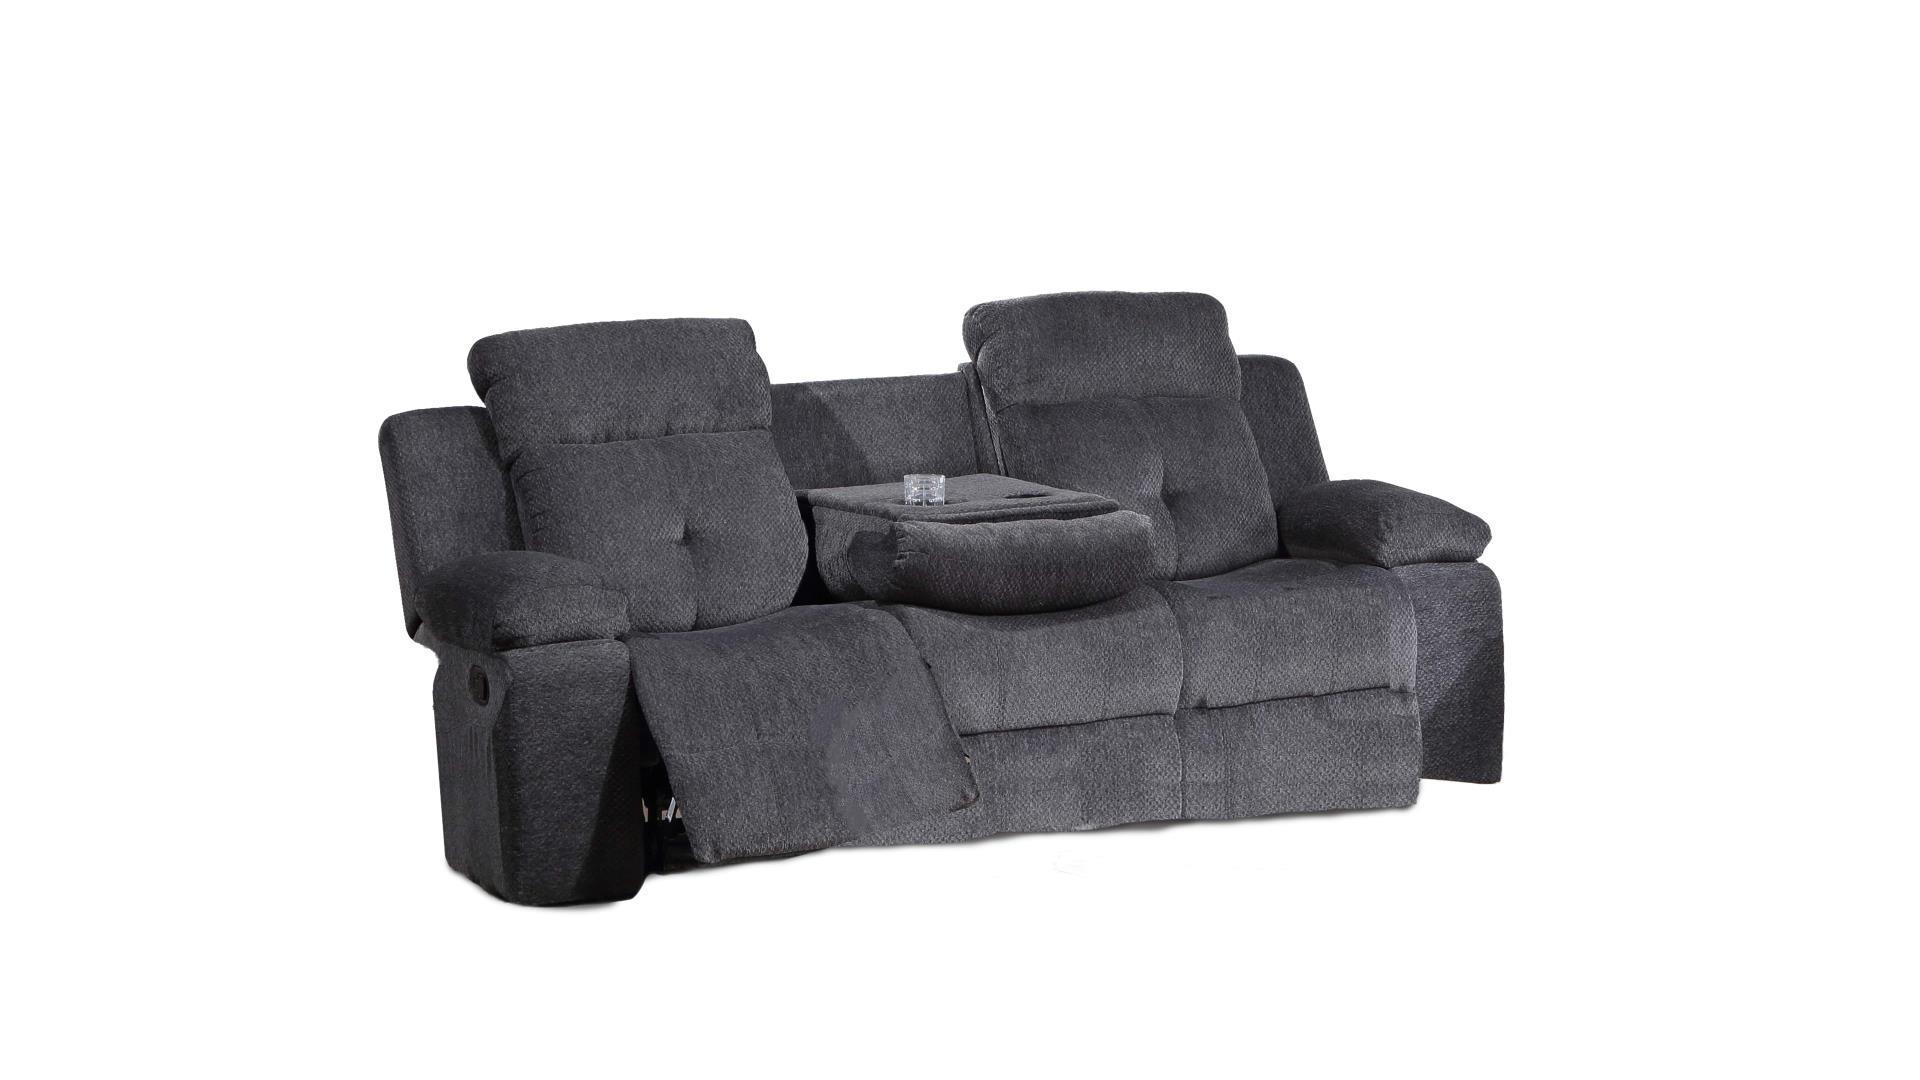 Contemporary, Modern Recliner Sofa PHOENIX PHOENIX-S in Gray Chenille